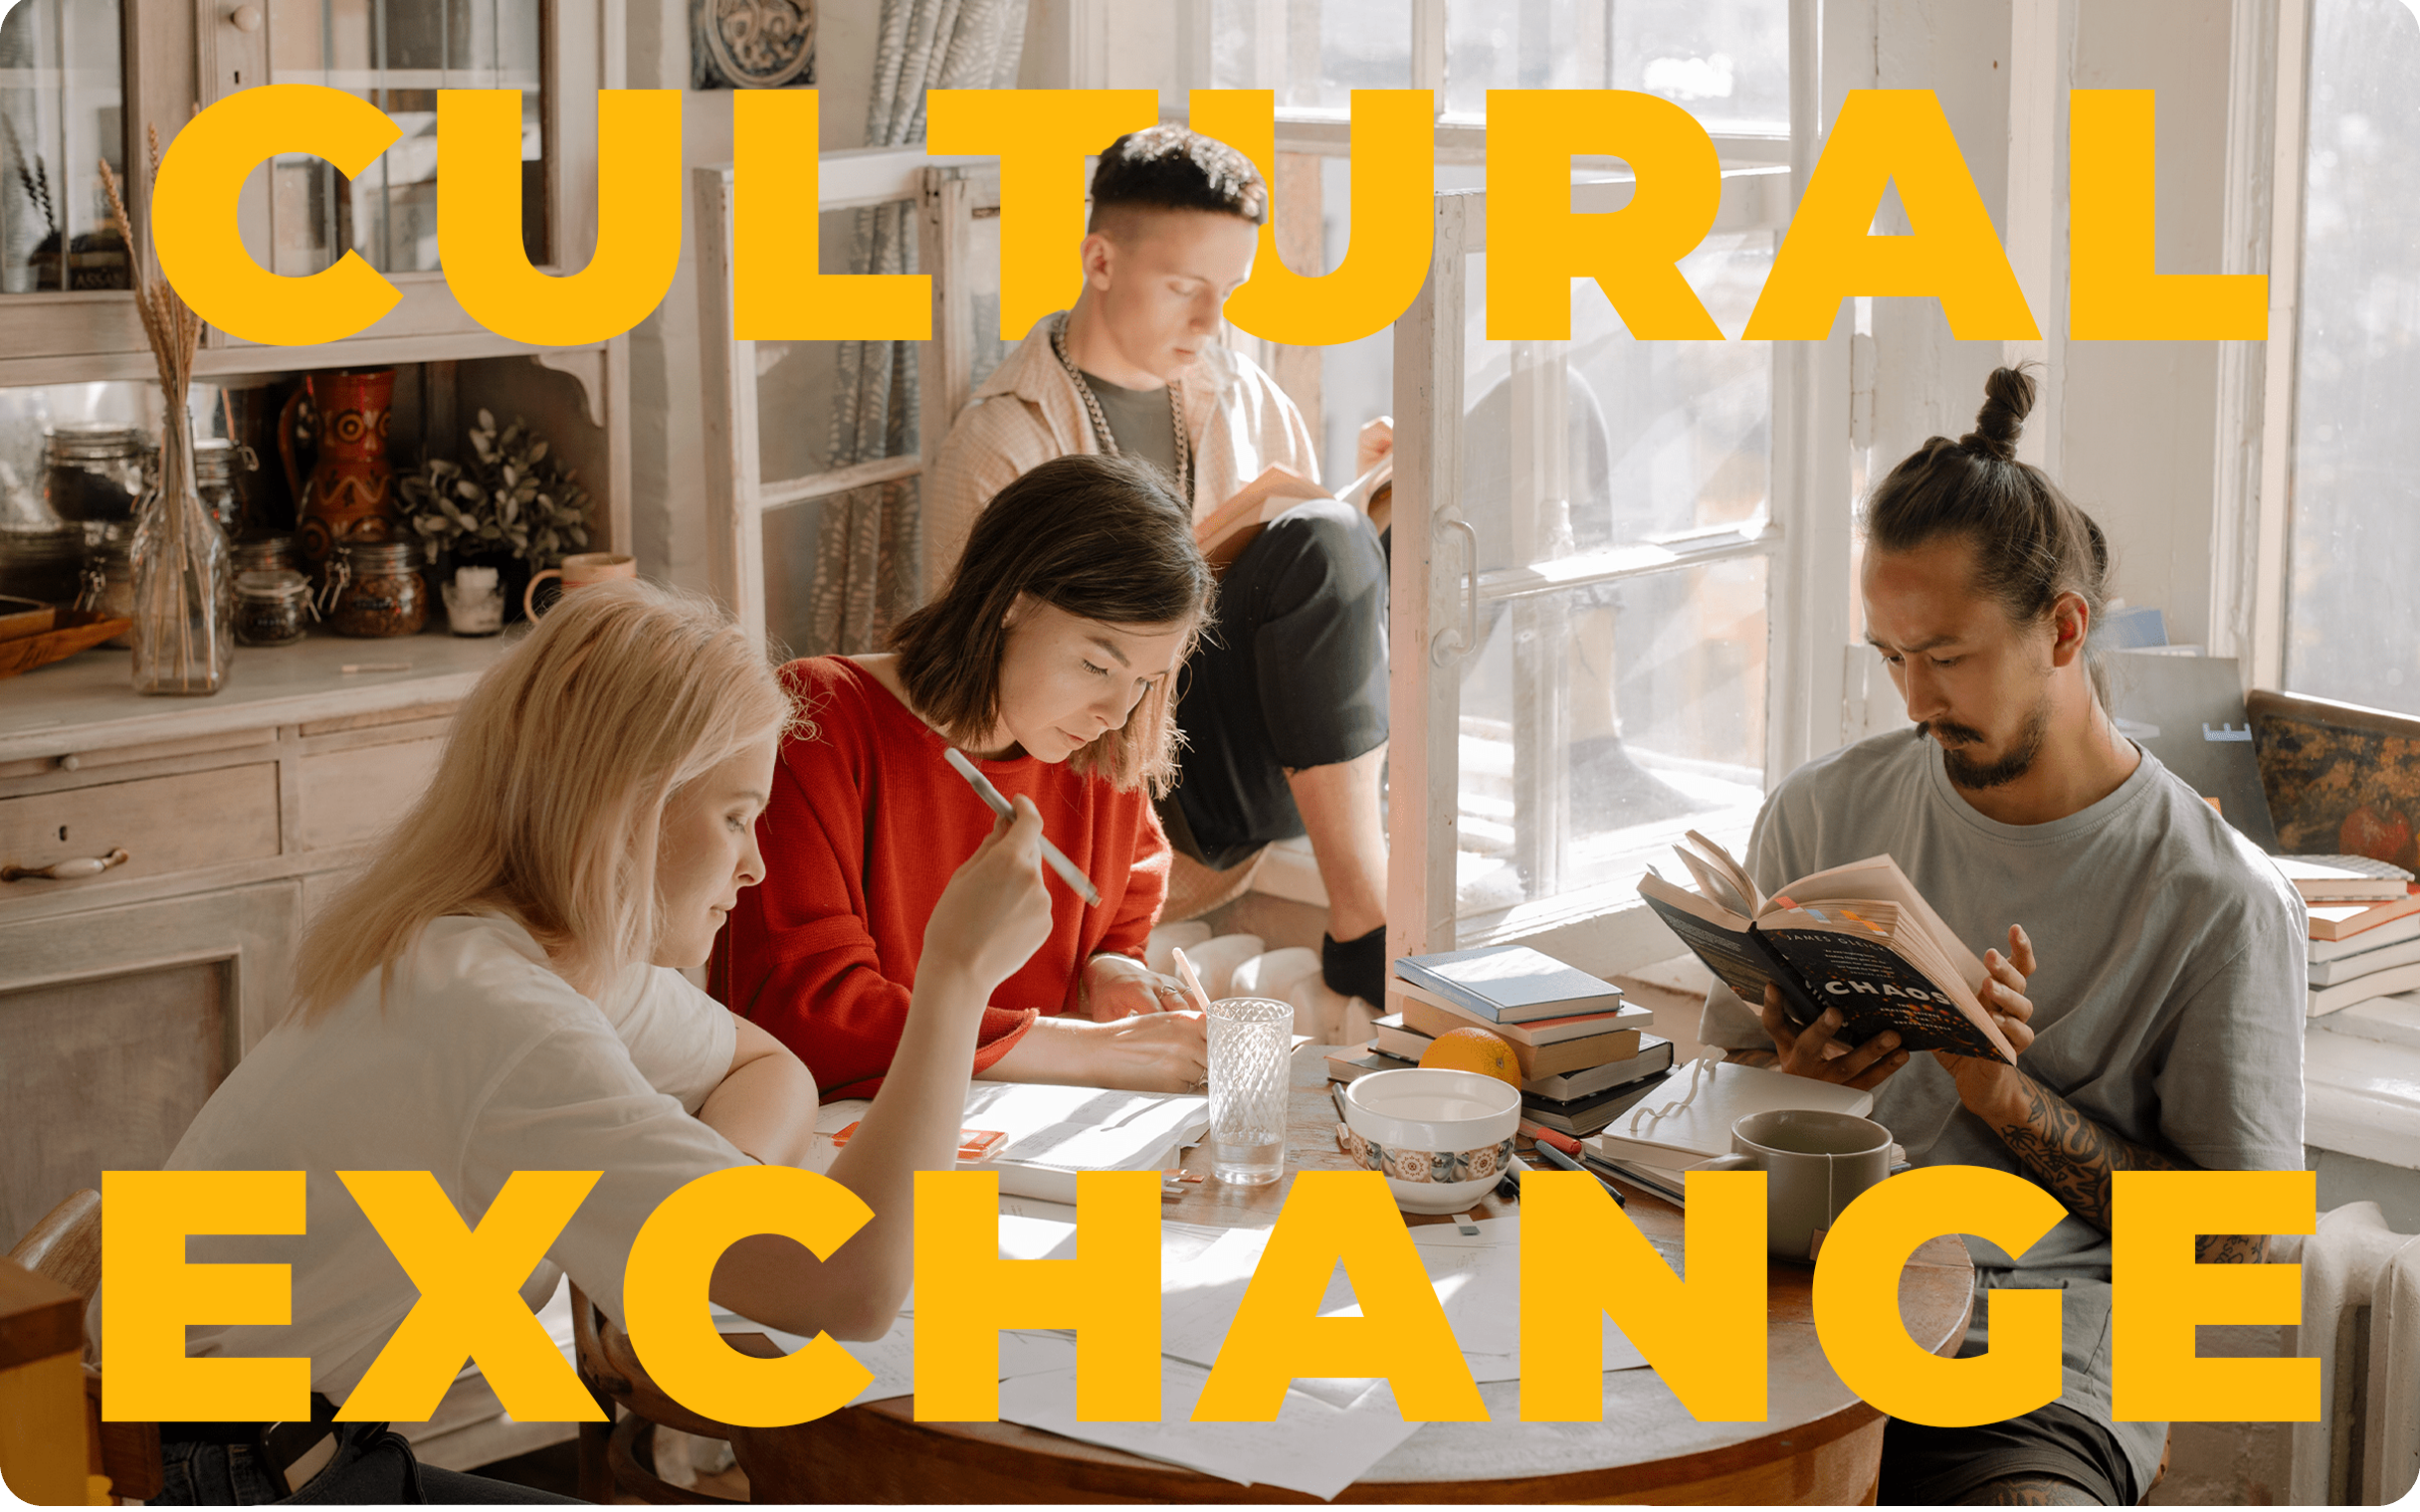 Cultural exchange through language: Connecting beyond borders